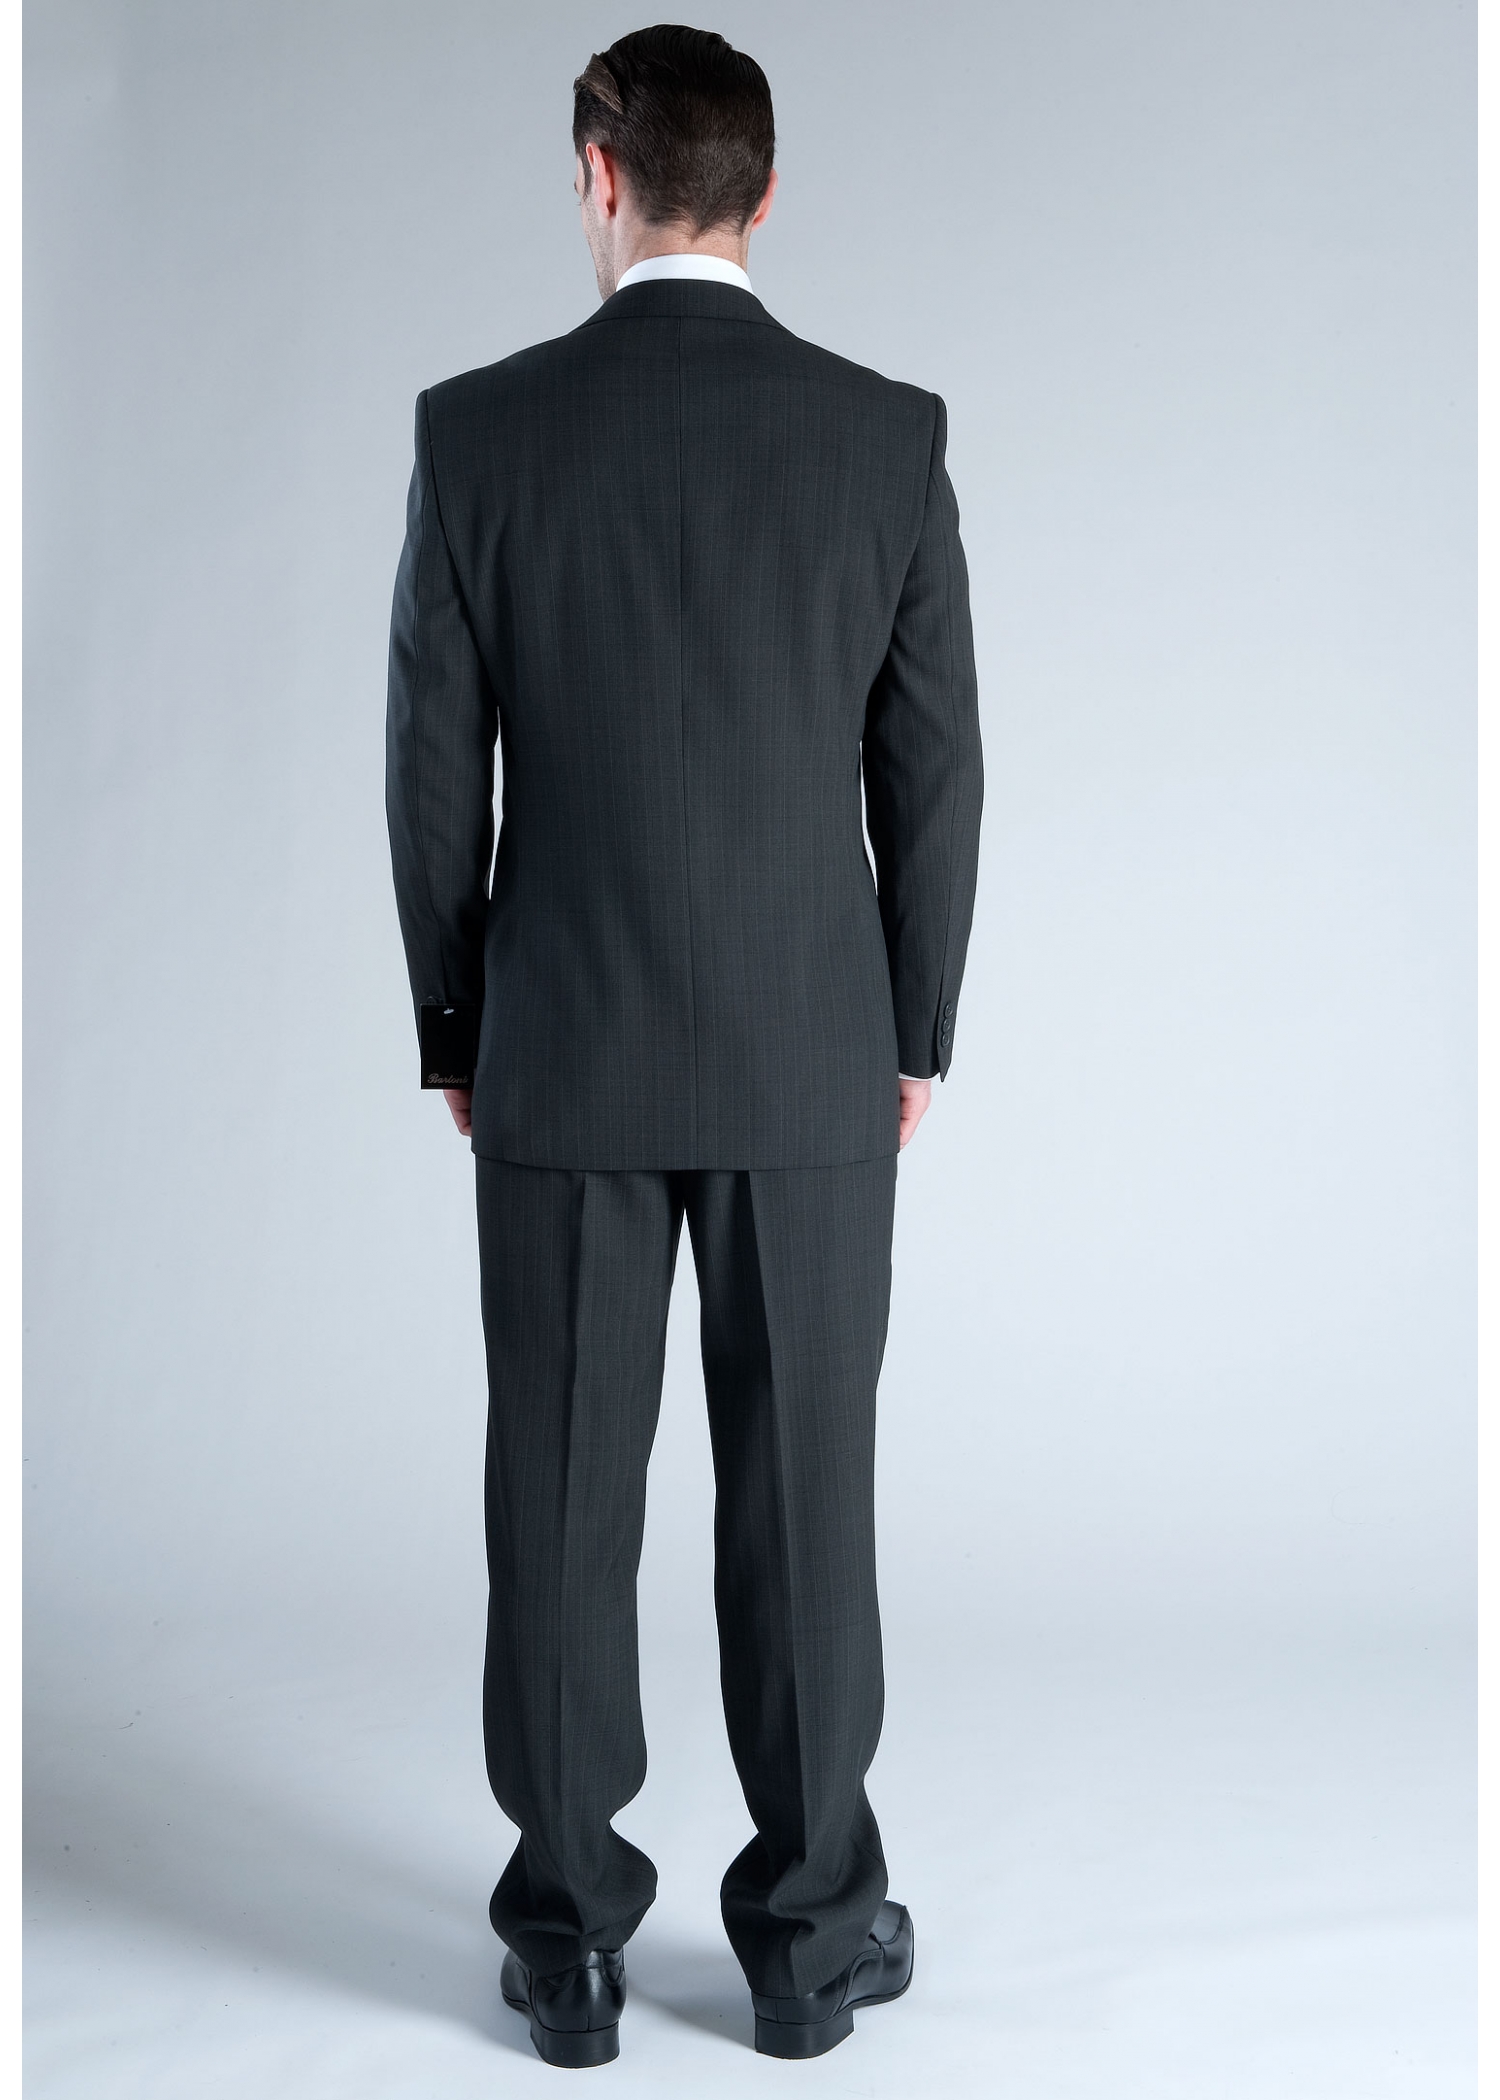 Grey Bartoni Suit - Tom Murphy's Formal and Menswear